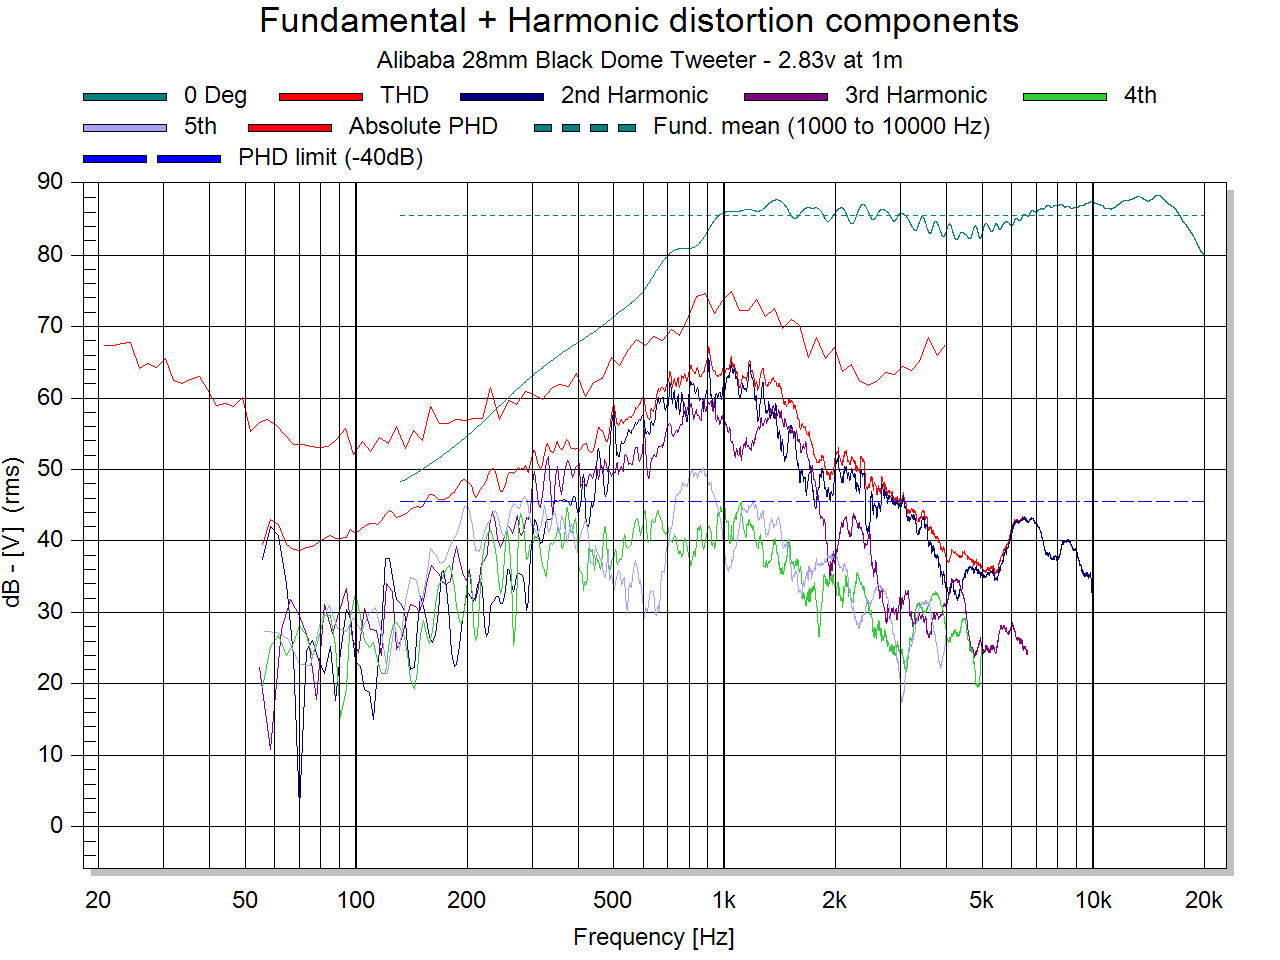 FundamentalHarmonicdistortioncomponentson-axisonly.png